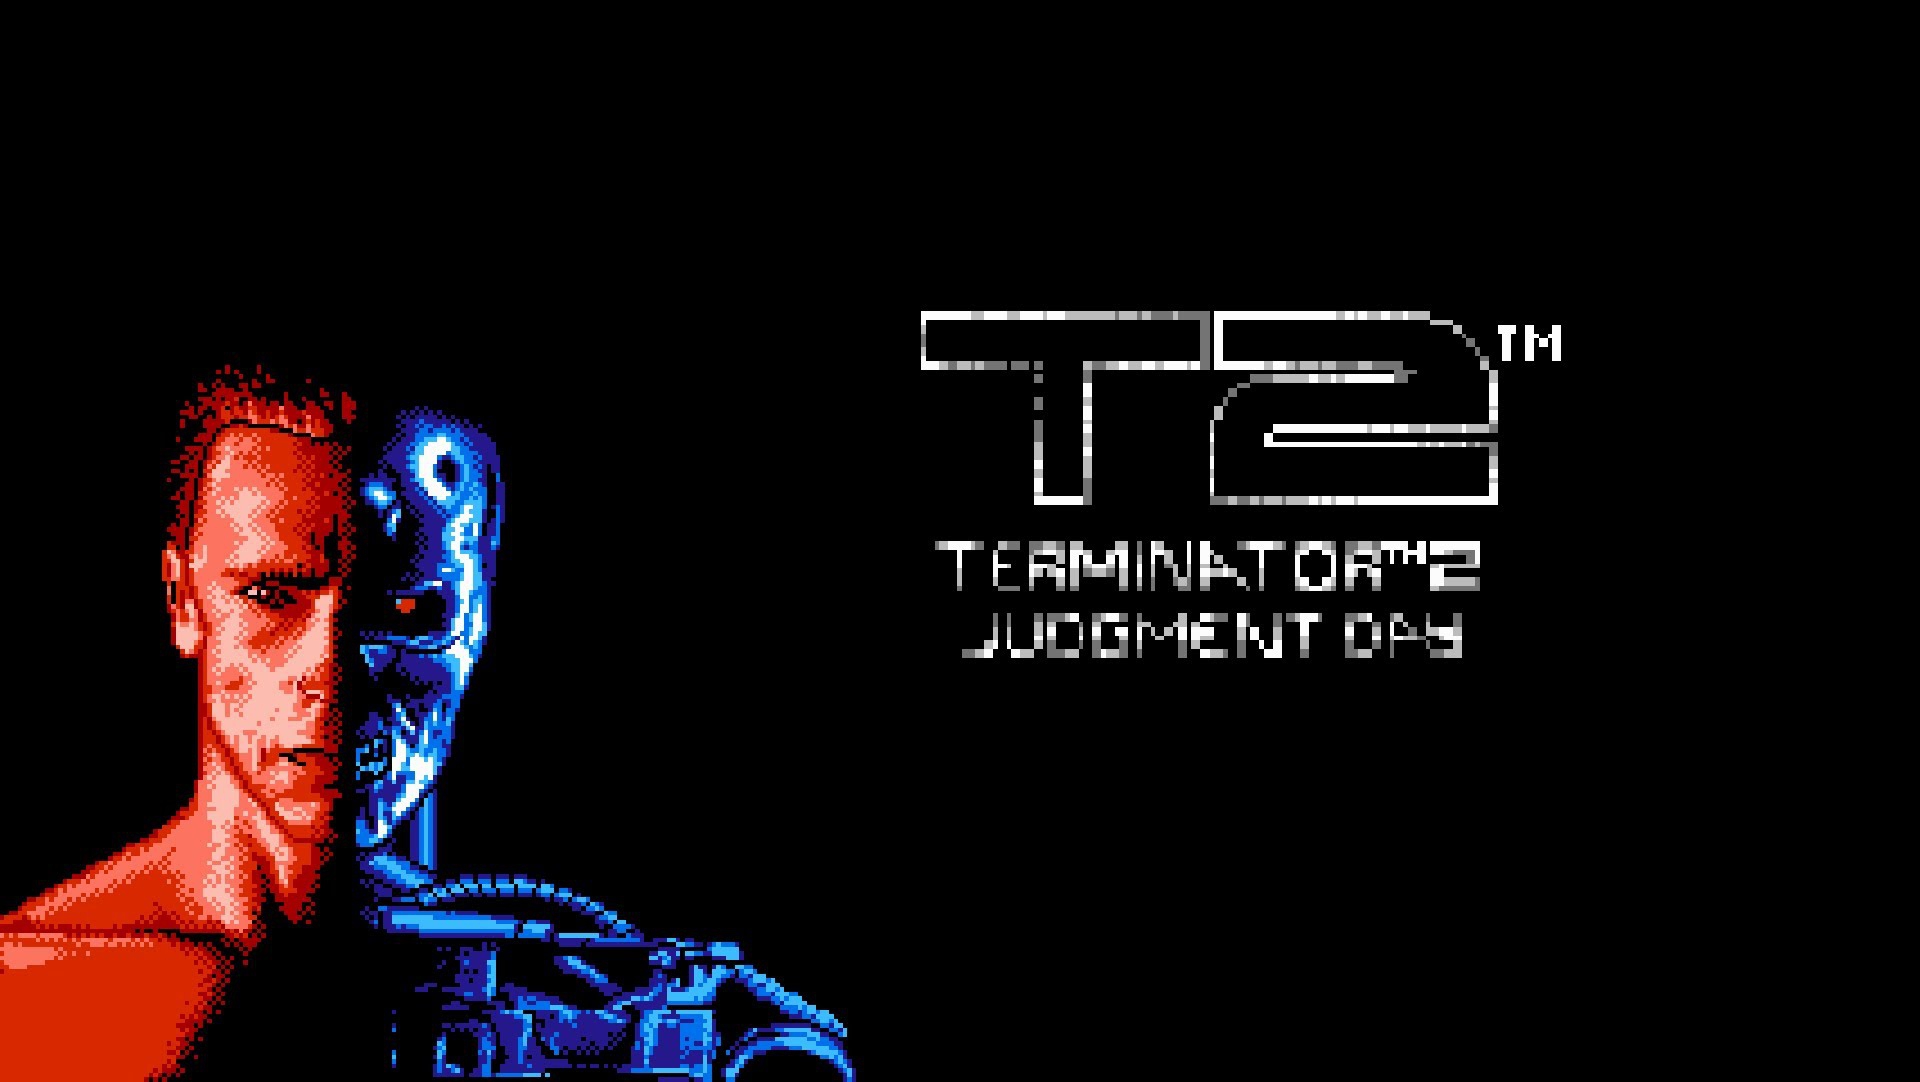 Игры terminator 2. Терминатор 2 игра на Денди. Terminator 2 NES картридж. Игра Терминатор 2 на Дэнди. Обложки игр NES Terminator 2.